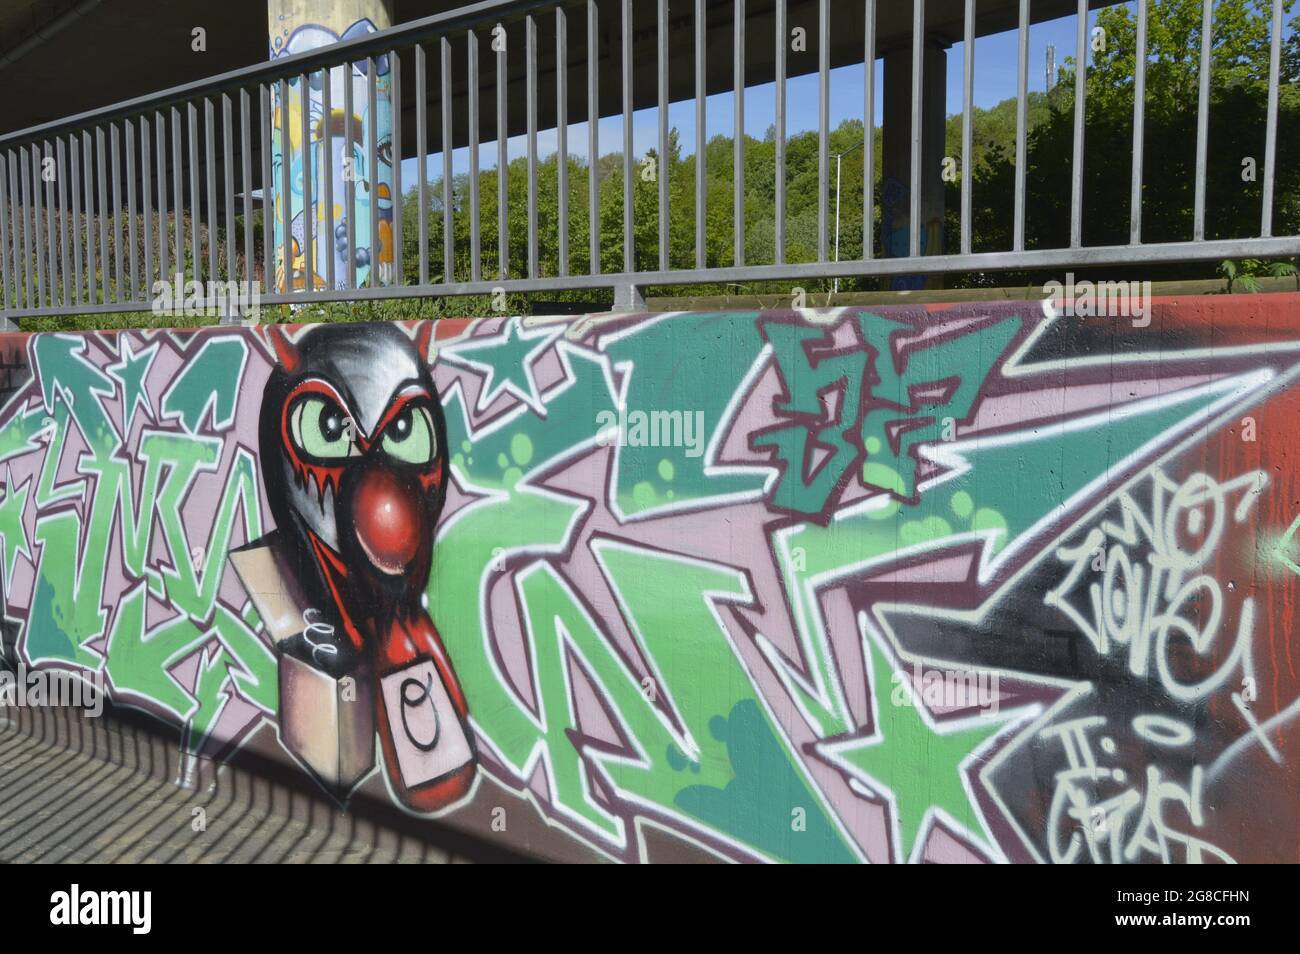 Graffiti on a concrete wall Stock Photo